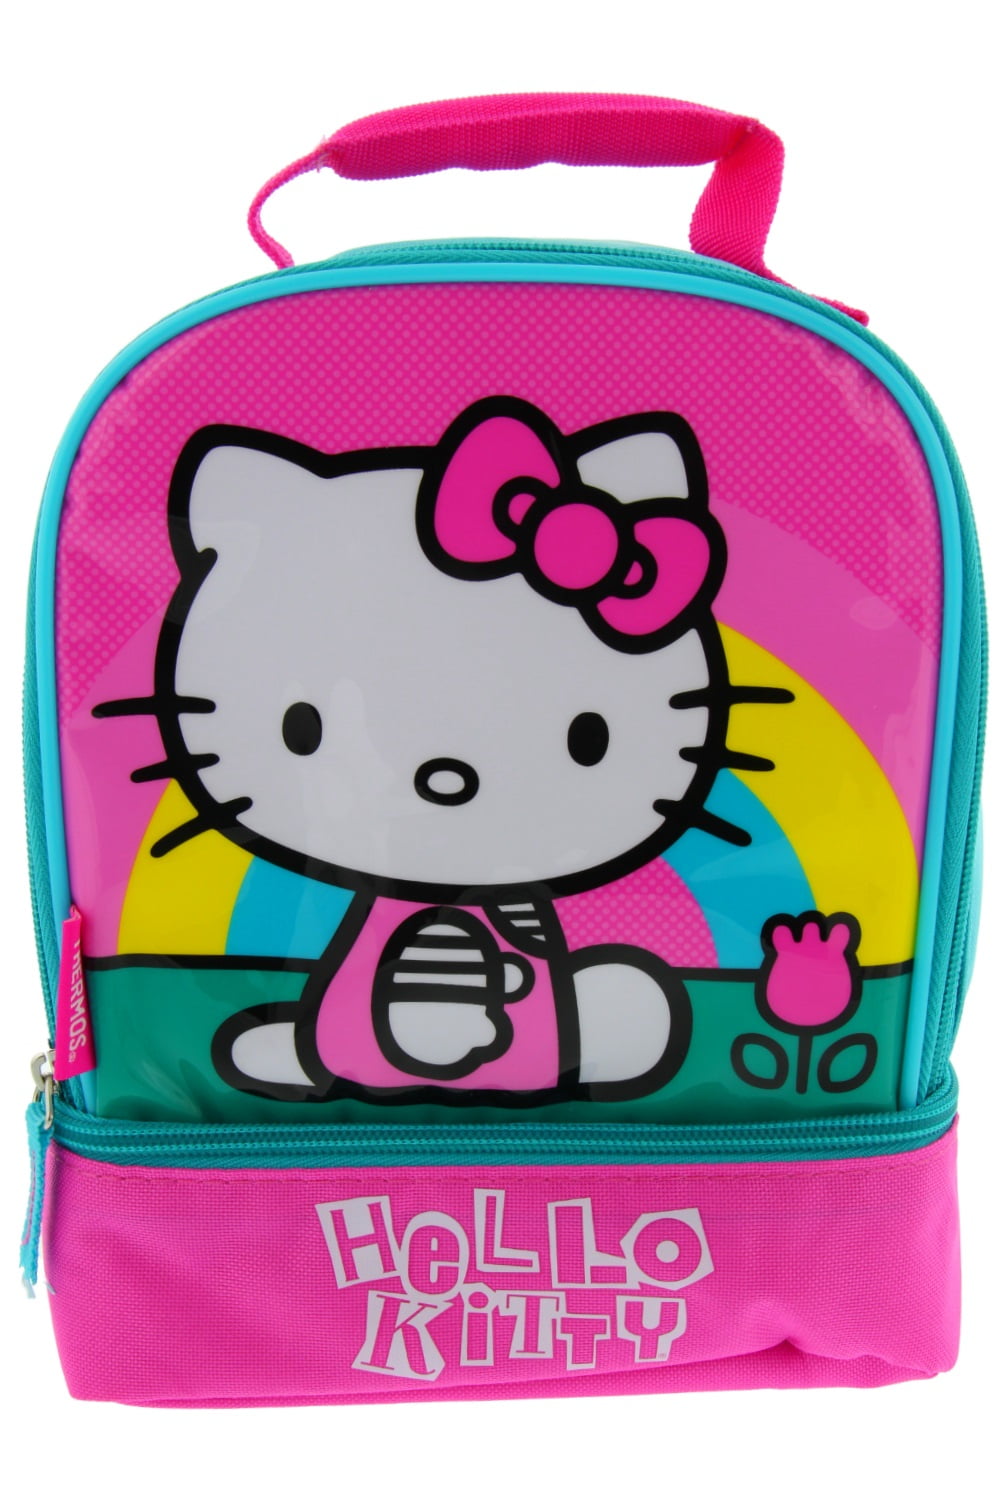 HELLO KITTY LUNCH BAG BOX PINK BNWT SOFT SIDES HANDLE SCHOOL GIRLS 